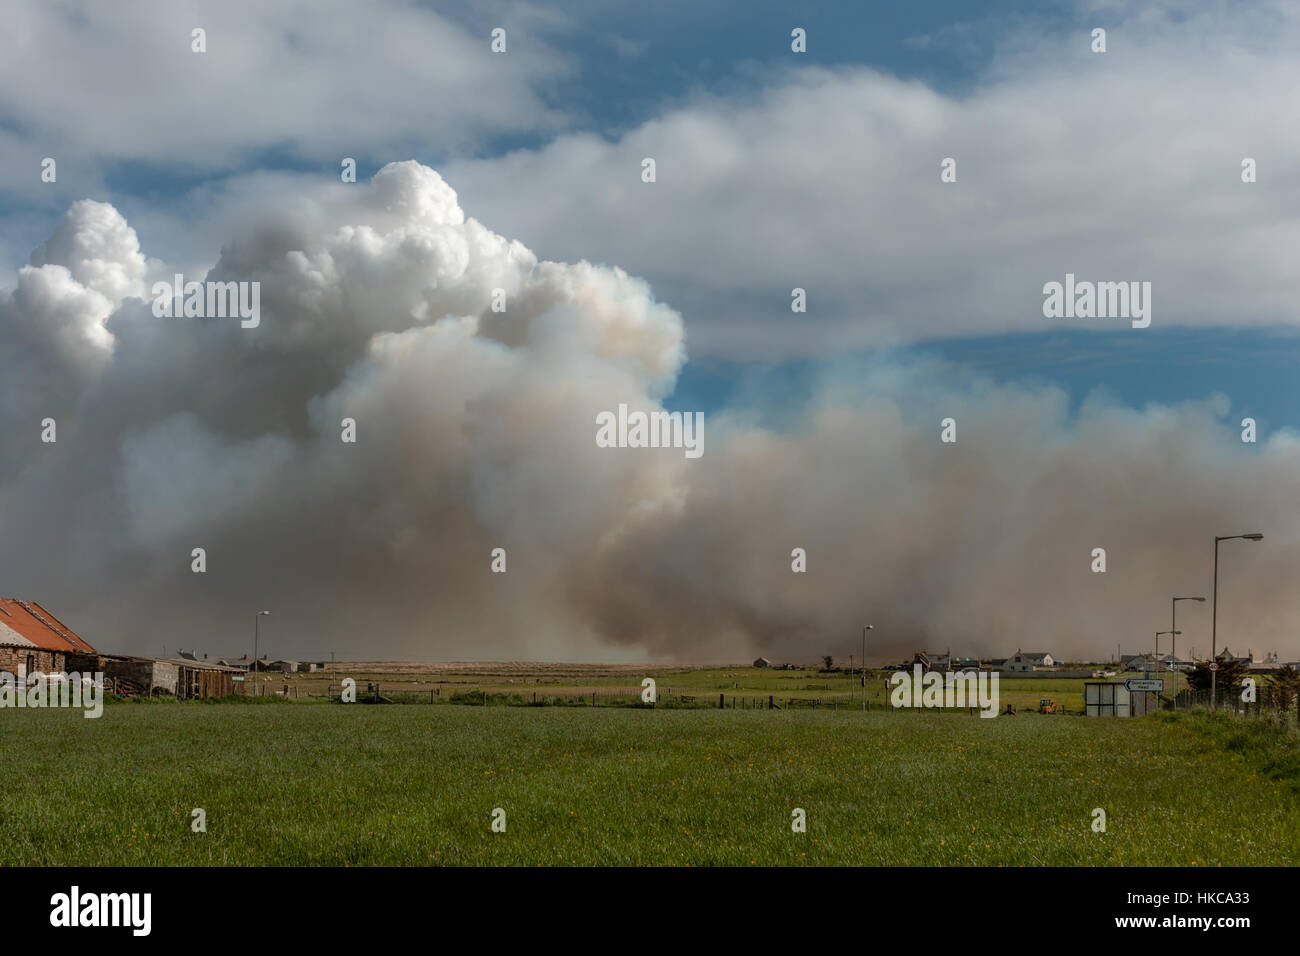 Wildfire threatens farm near John O Groats village, Scotland. Stock Photo